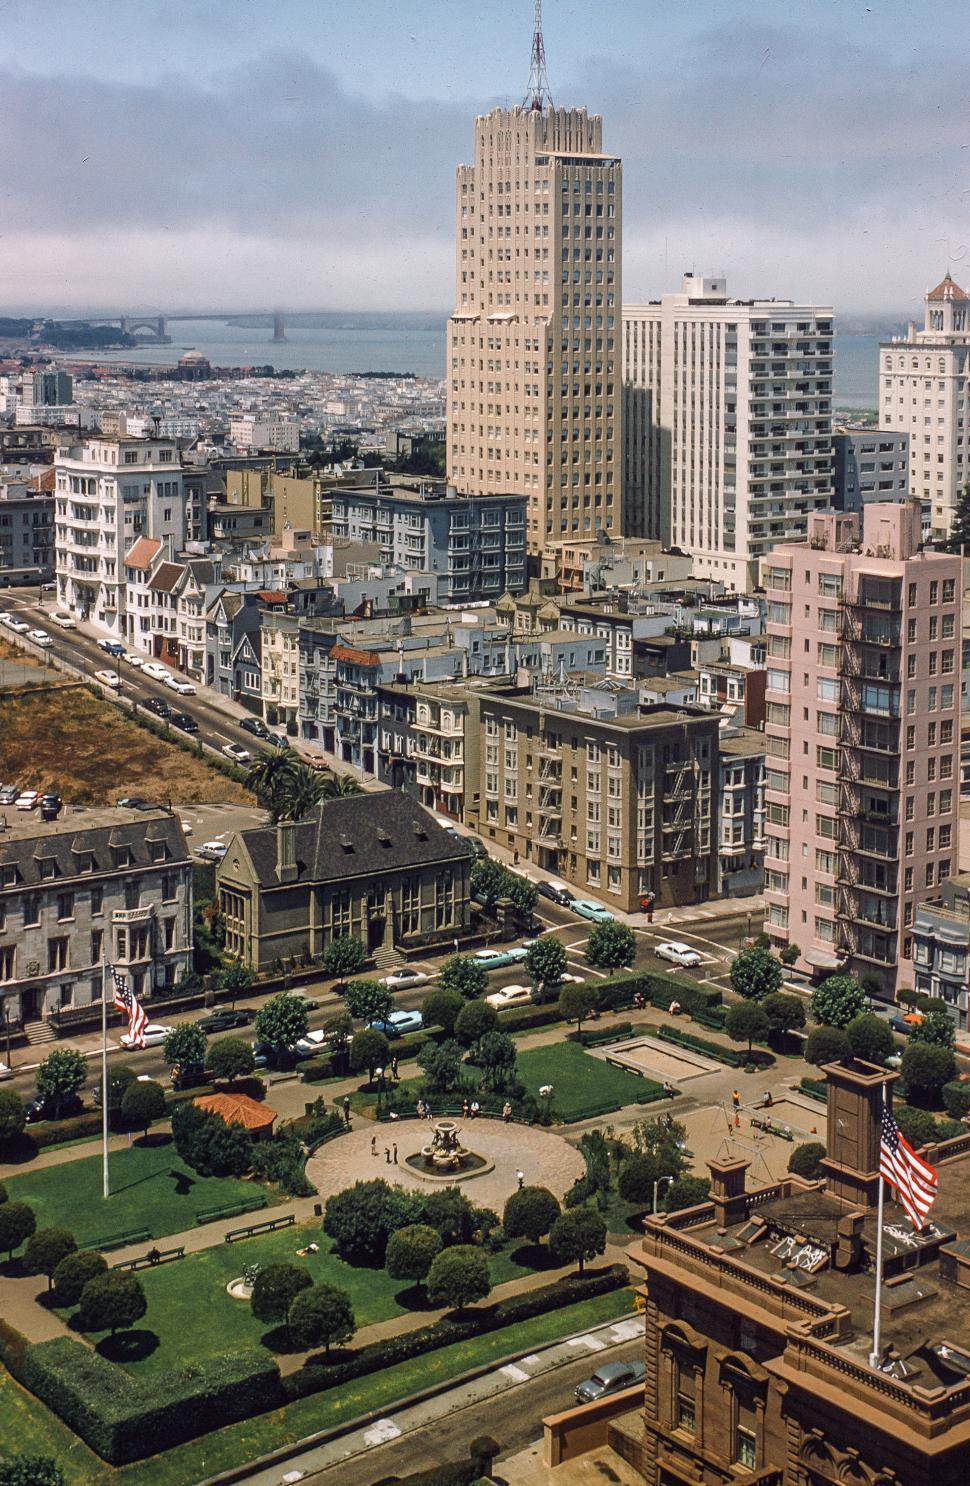 Free Image of San Francisco City Vintage 